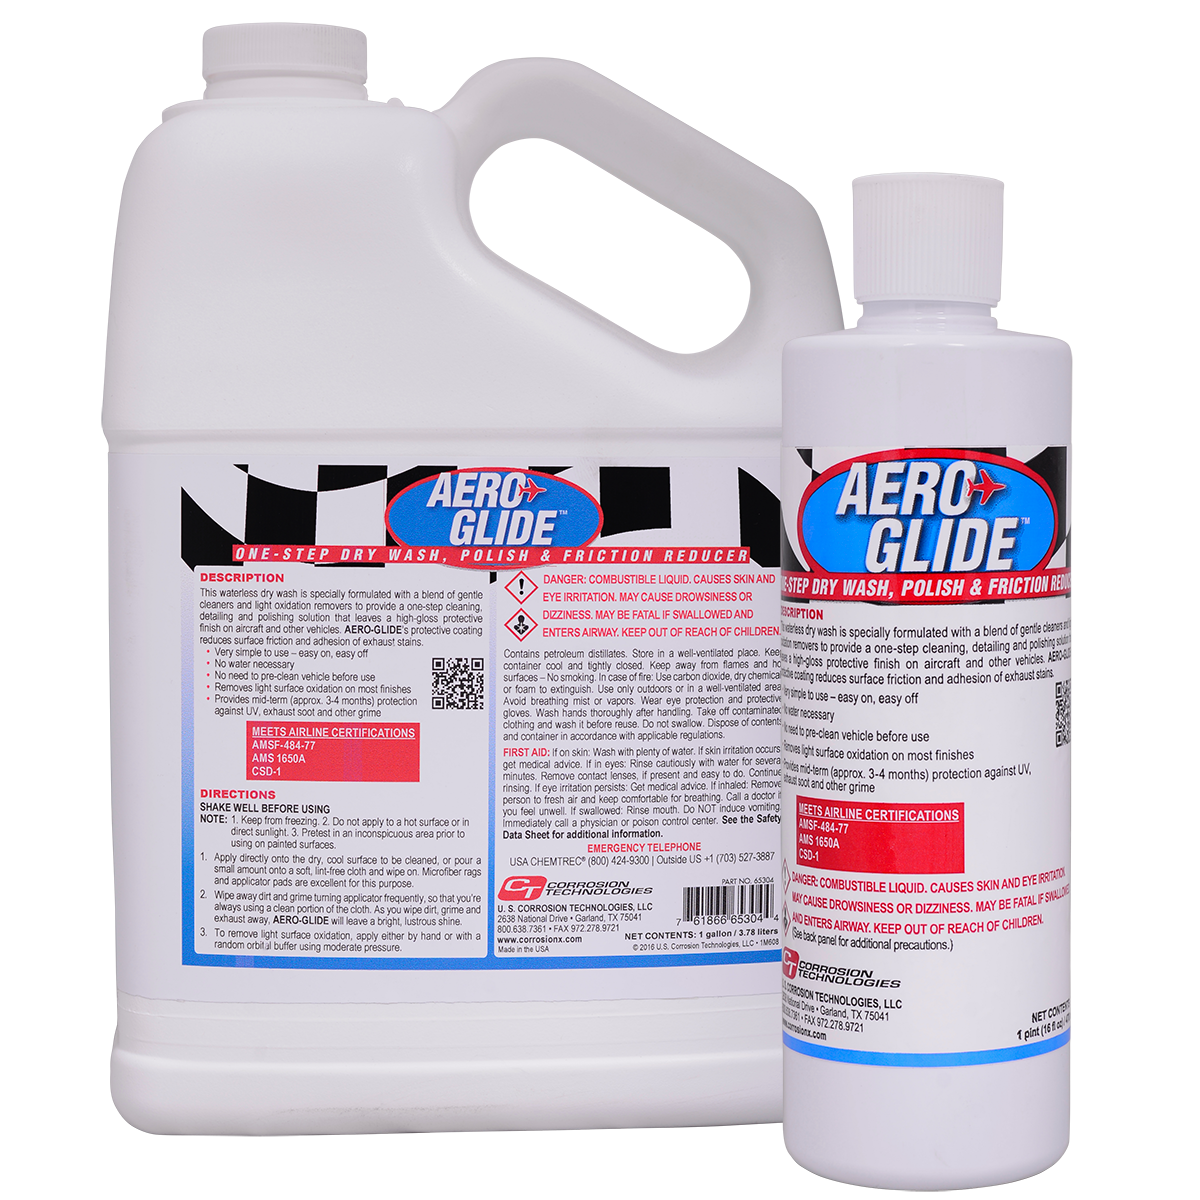 Aero-Glide cleaner polish